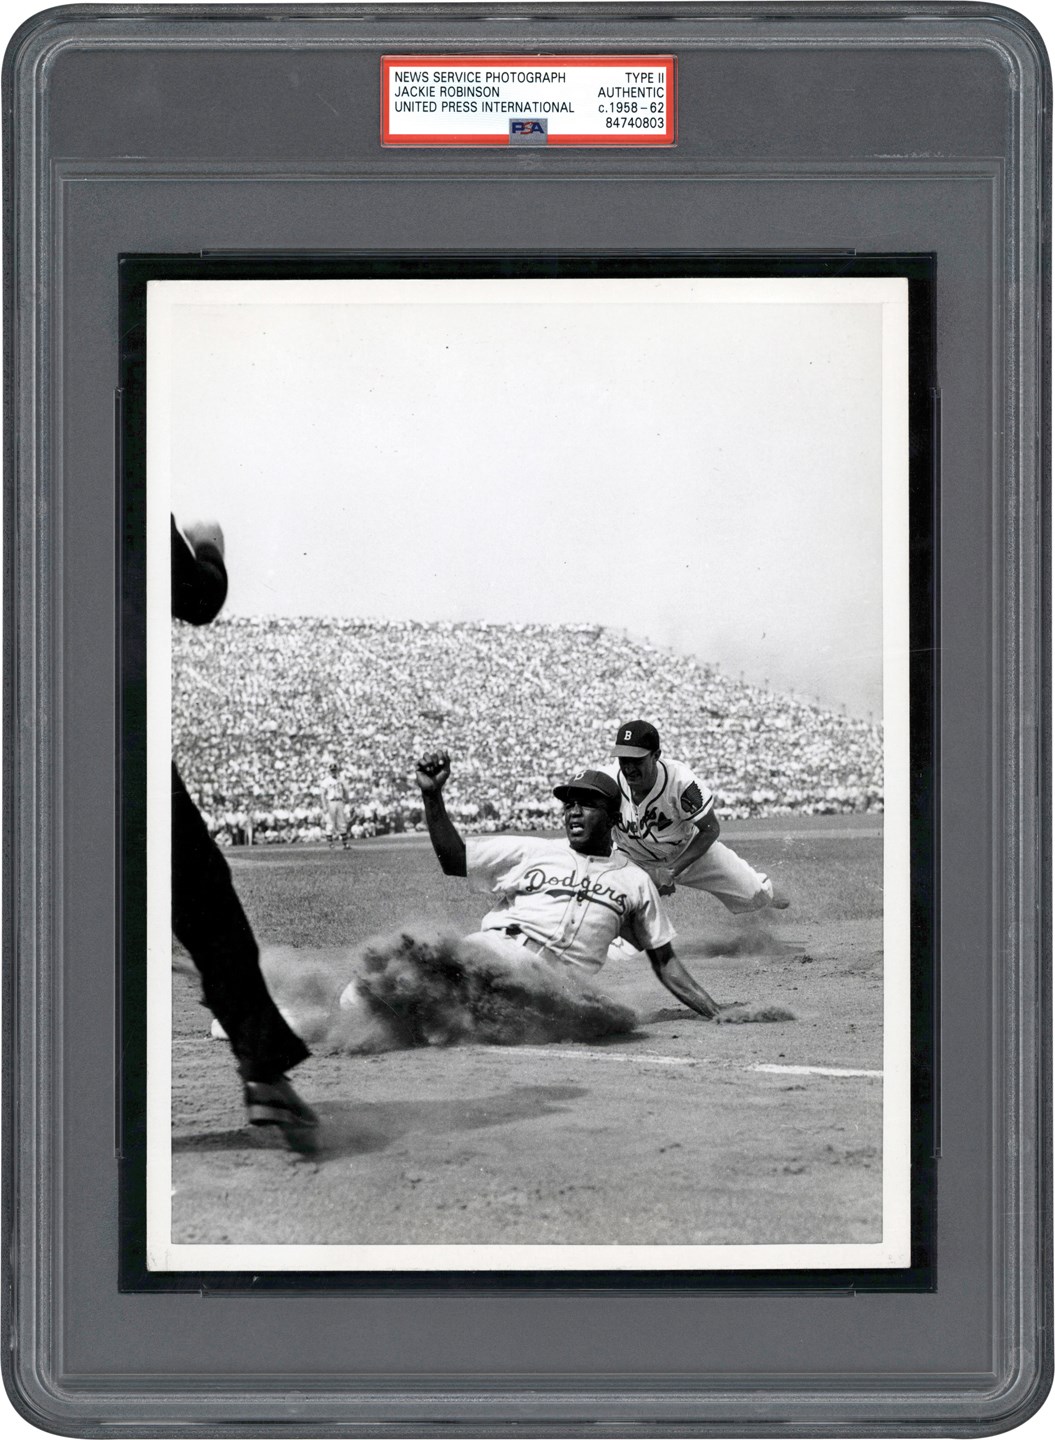 Jackie Robinson & Brooklyn Dodgers - Jackie Robinson Sliding Into First Photograph (PSA Type II)